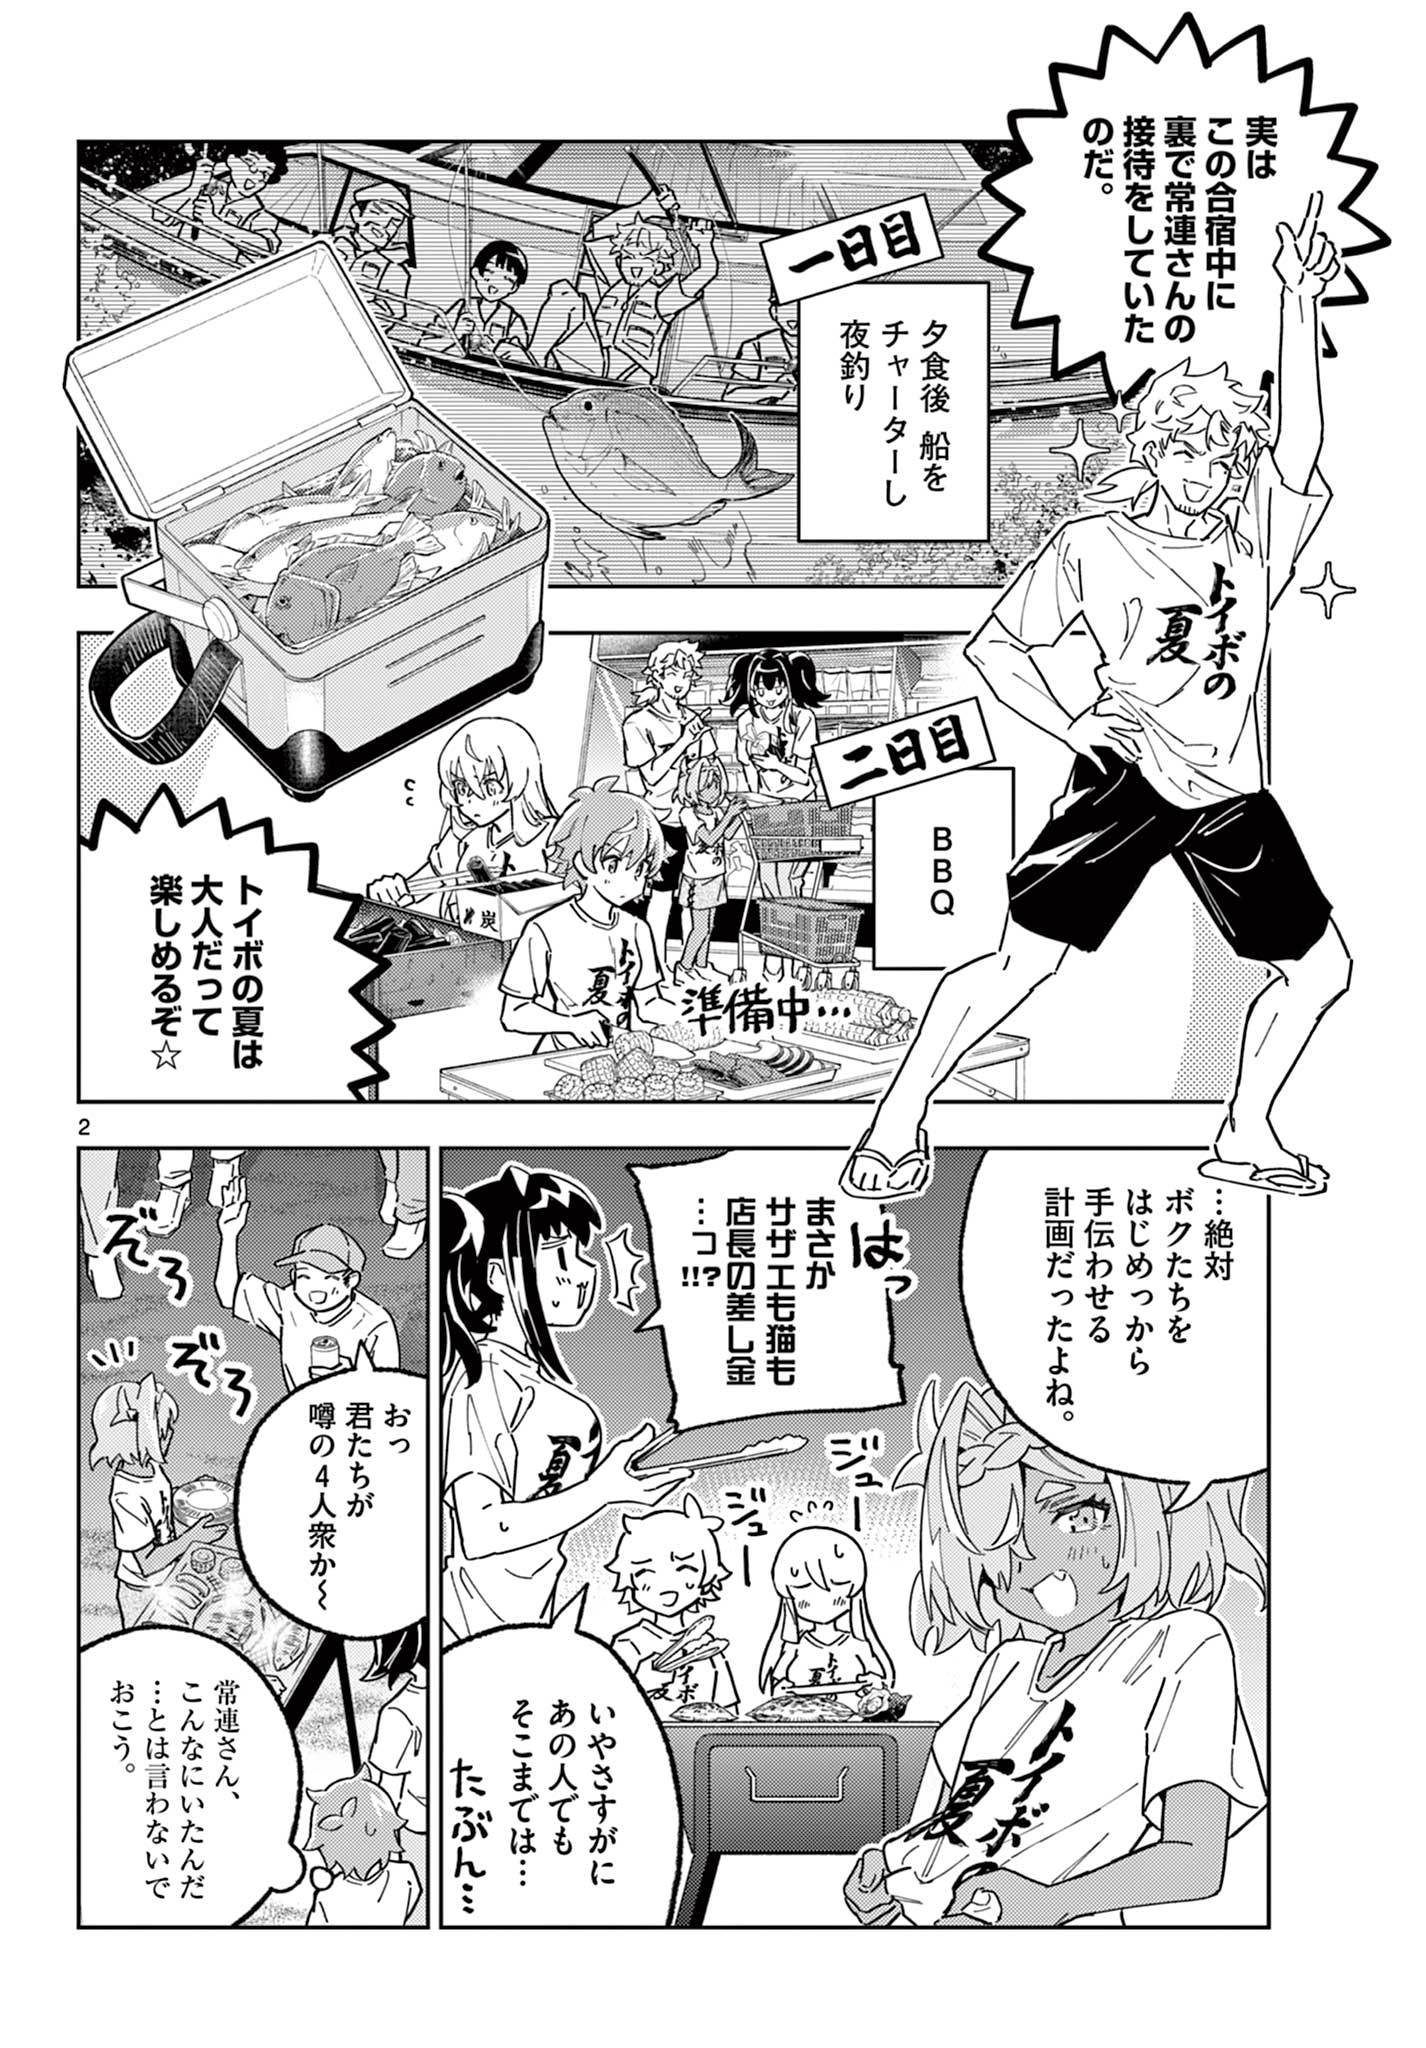 Gareki! Modeller Girls no Houkago - Chapter 18 - Page 2